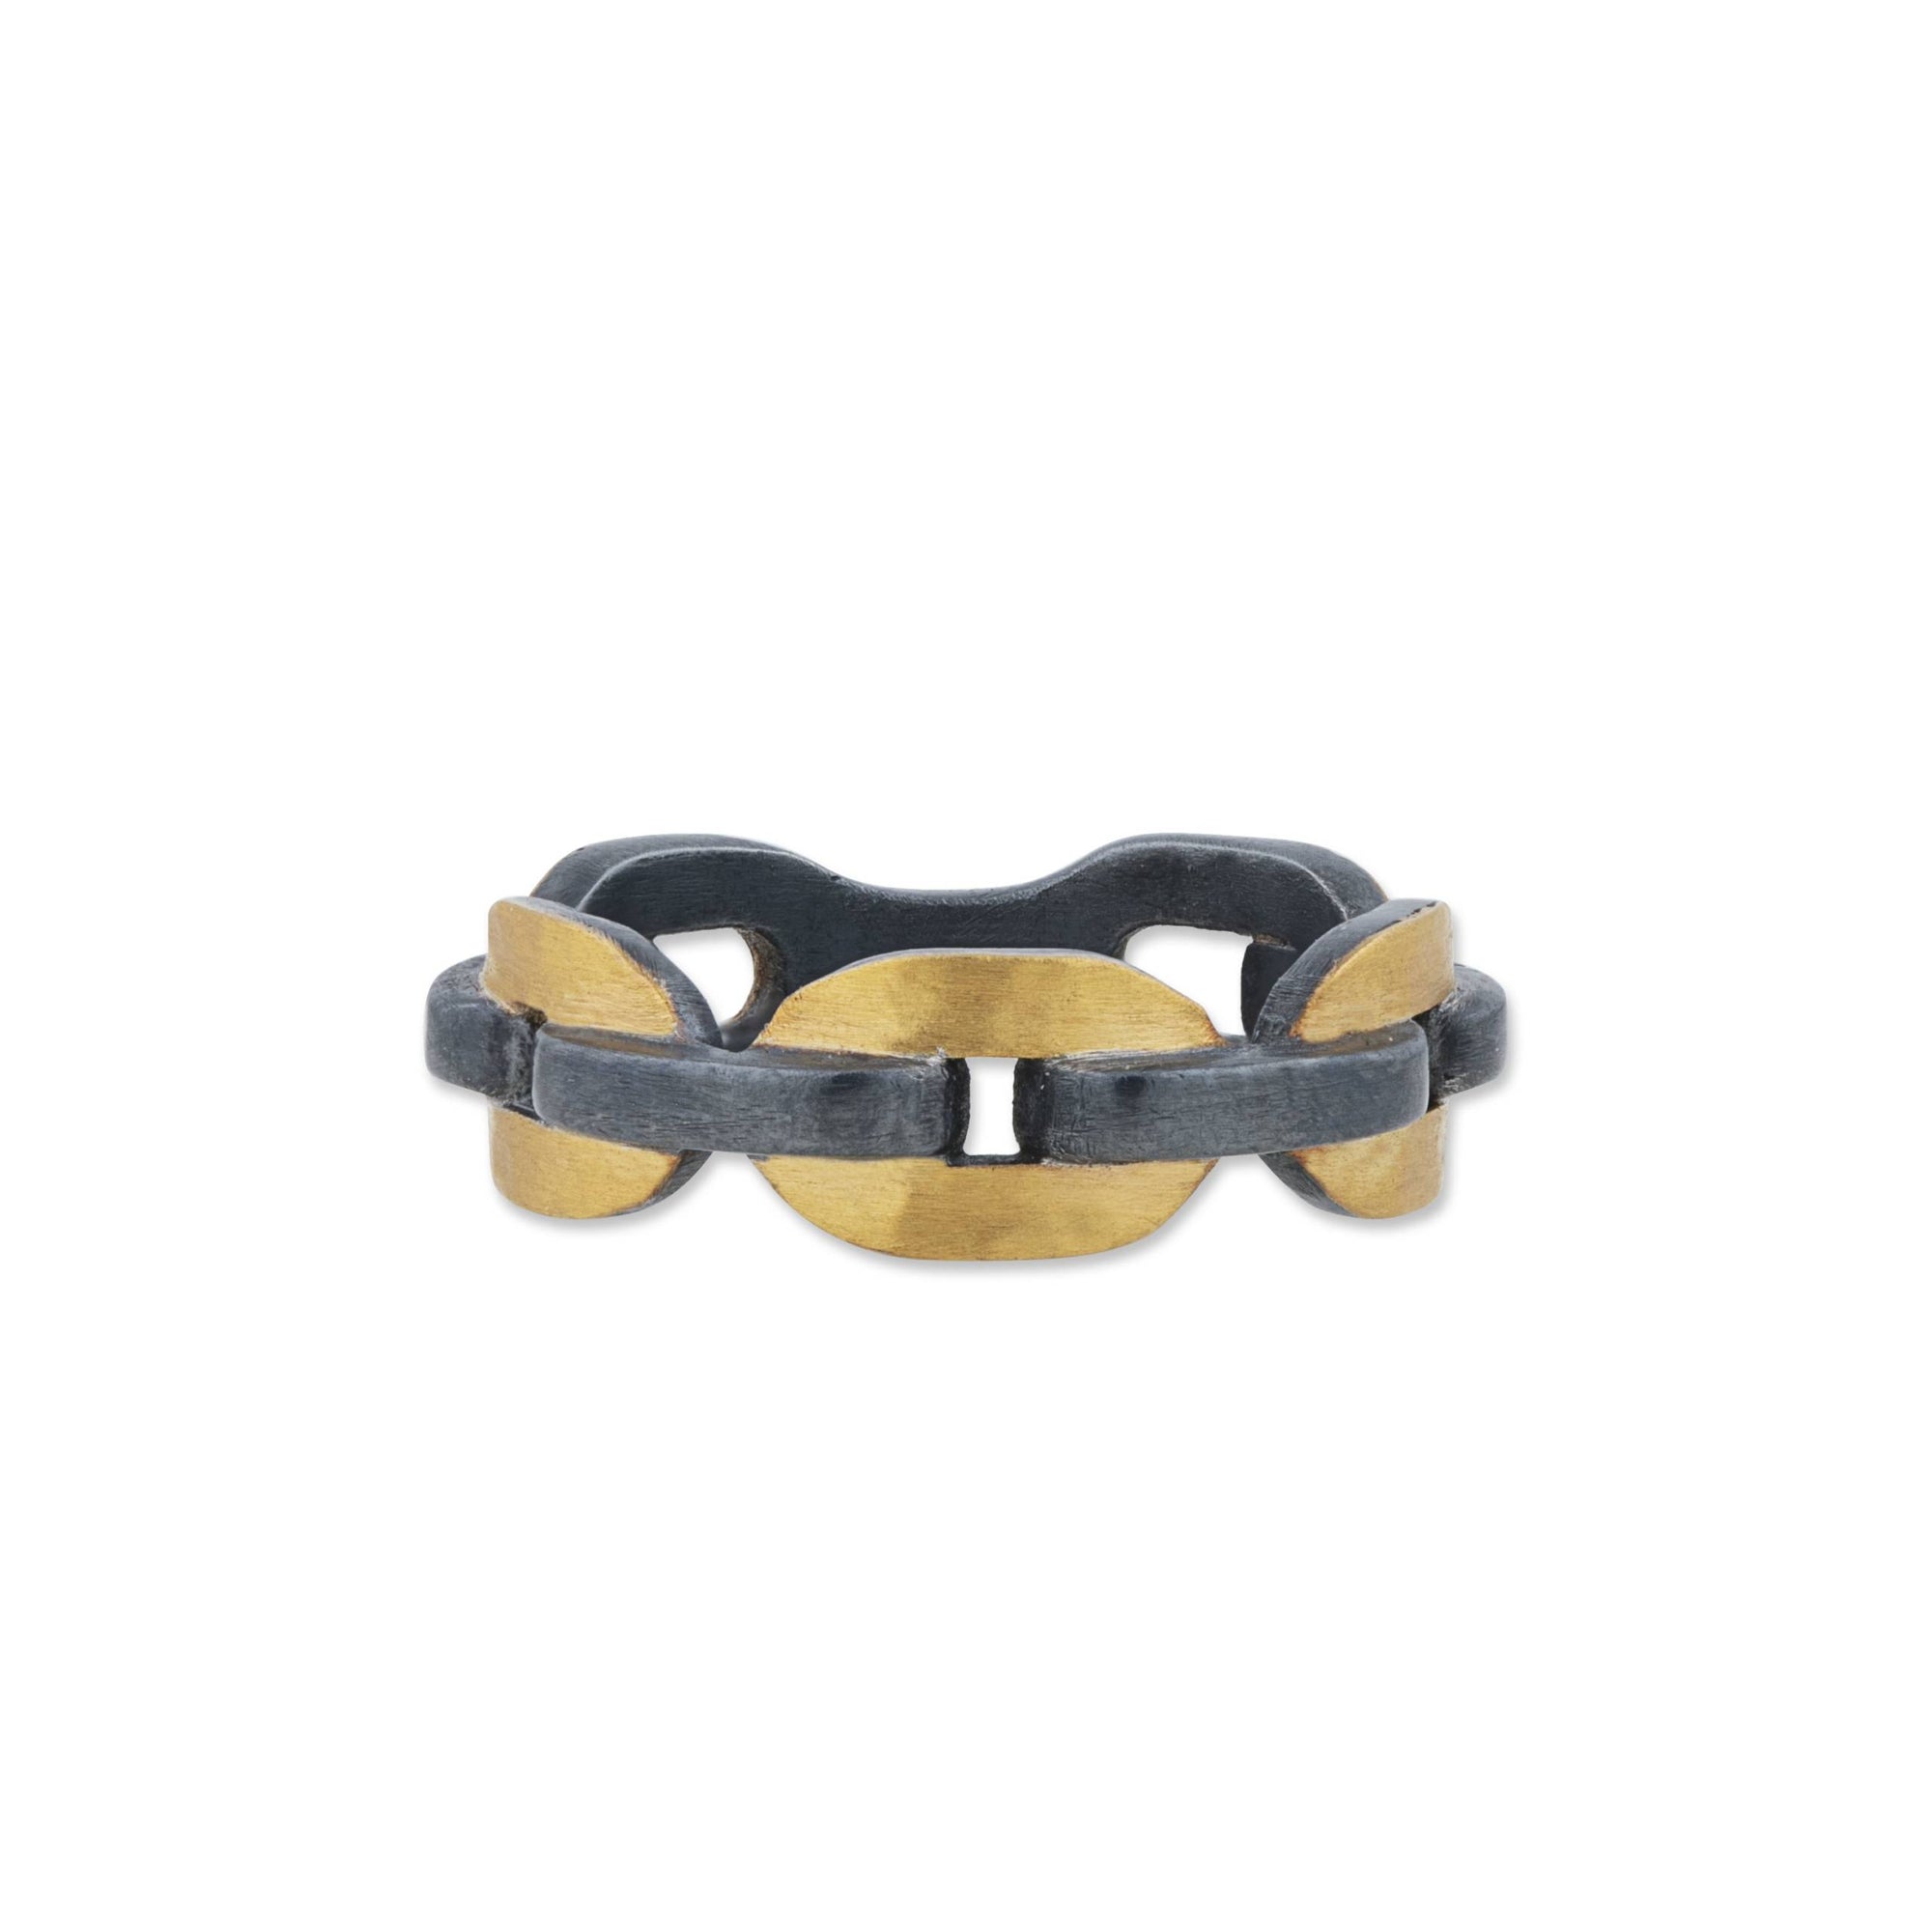 Lika Behar 24K Gold & Oxidized Sterling Silver Ring